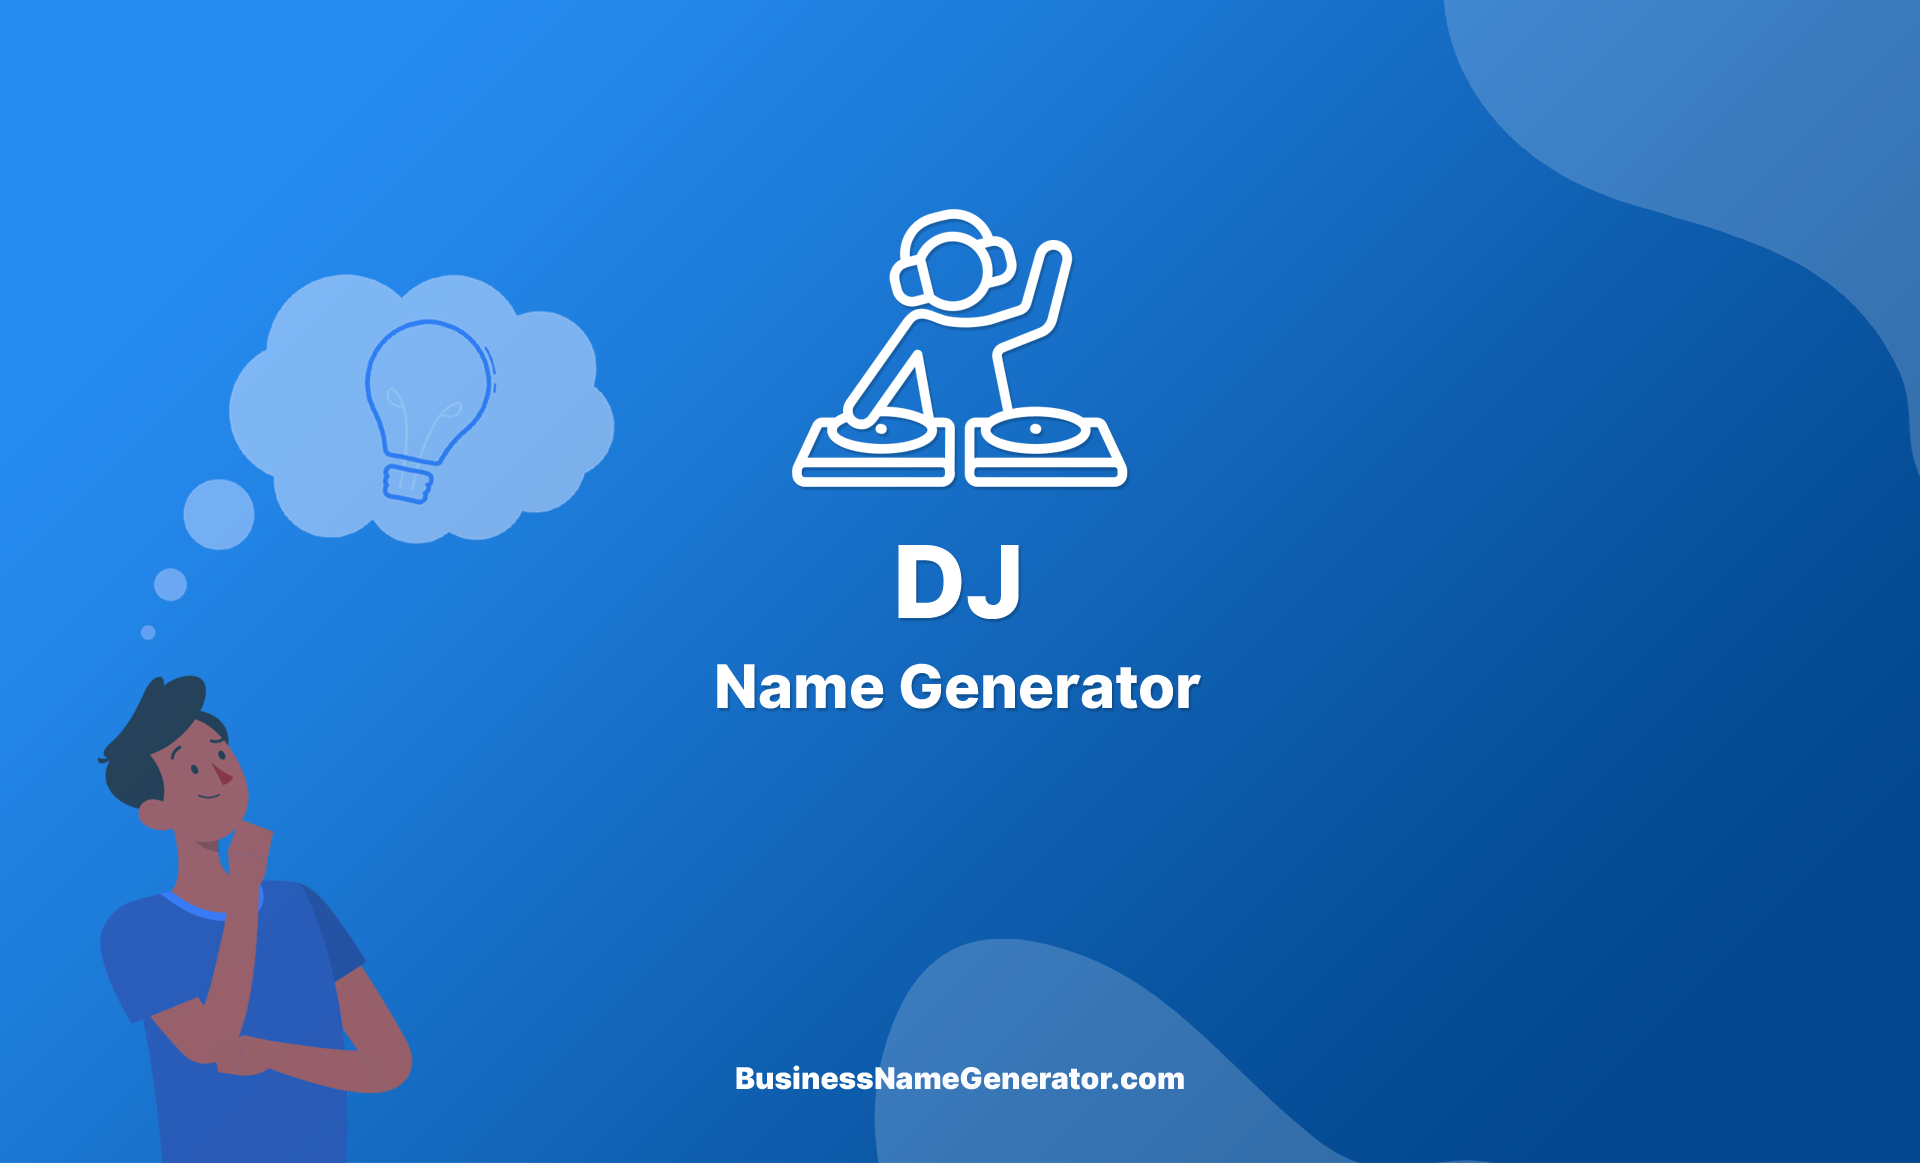 DJ Name Generator